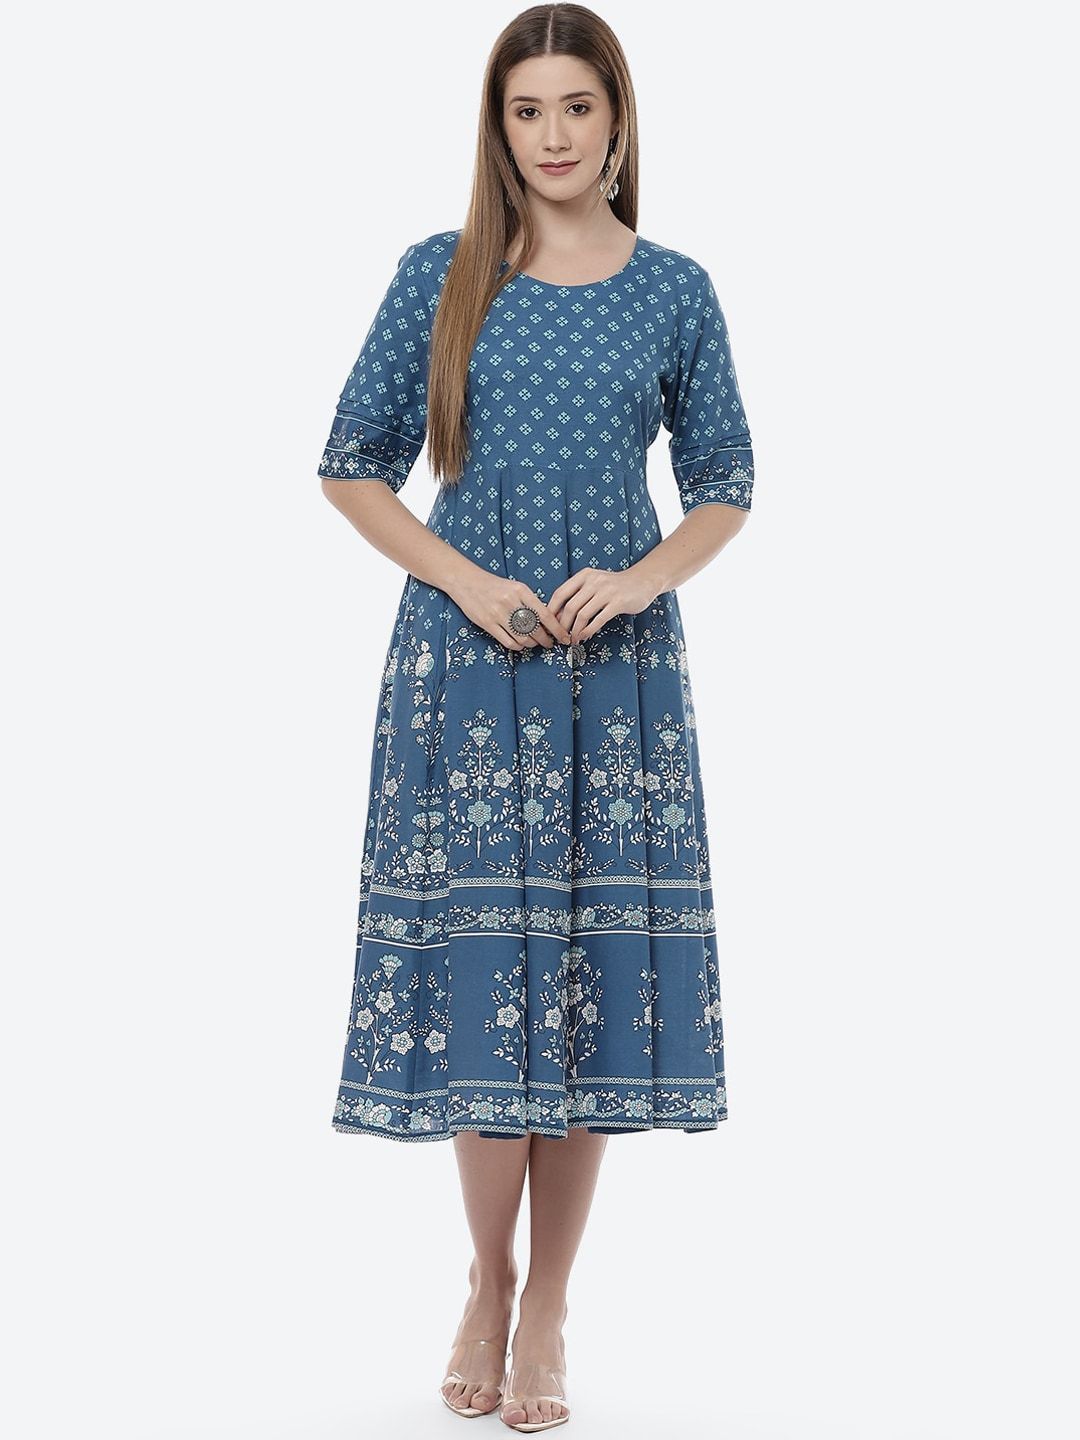 Rangriti Blue & White Ethnic Motifs Printed Ethnic Midi Dress Price in India